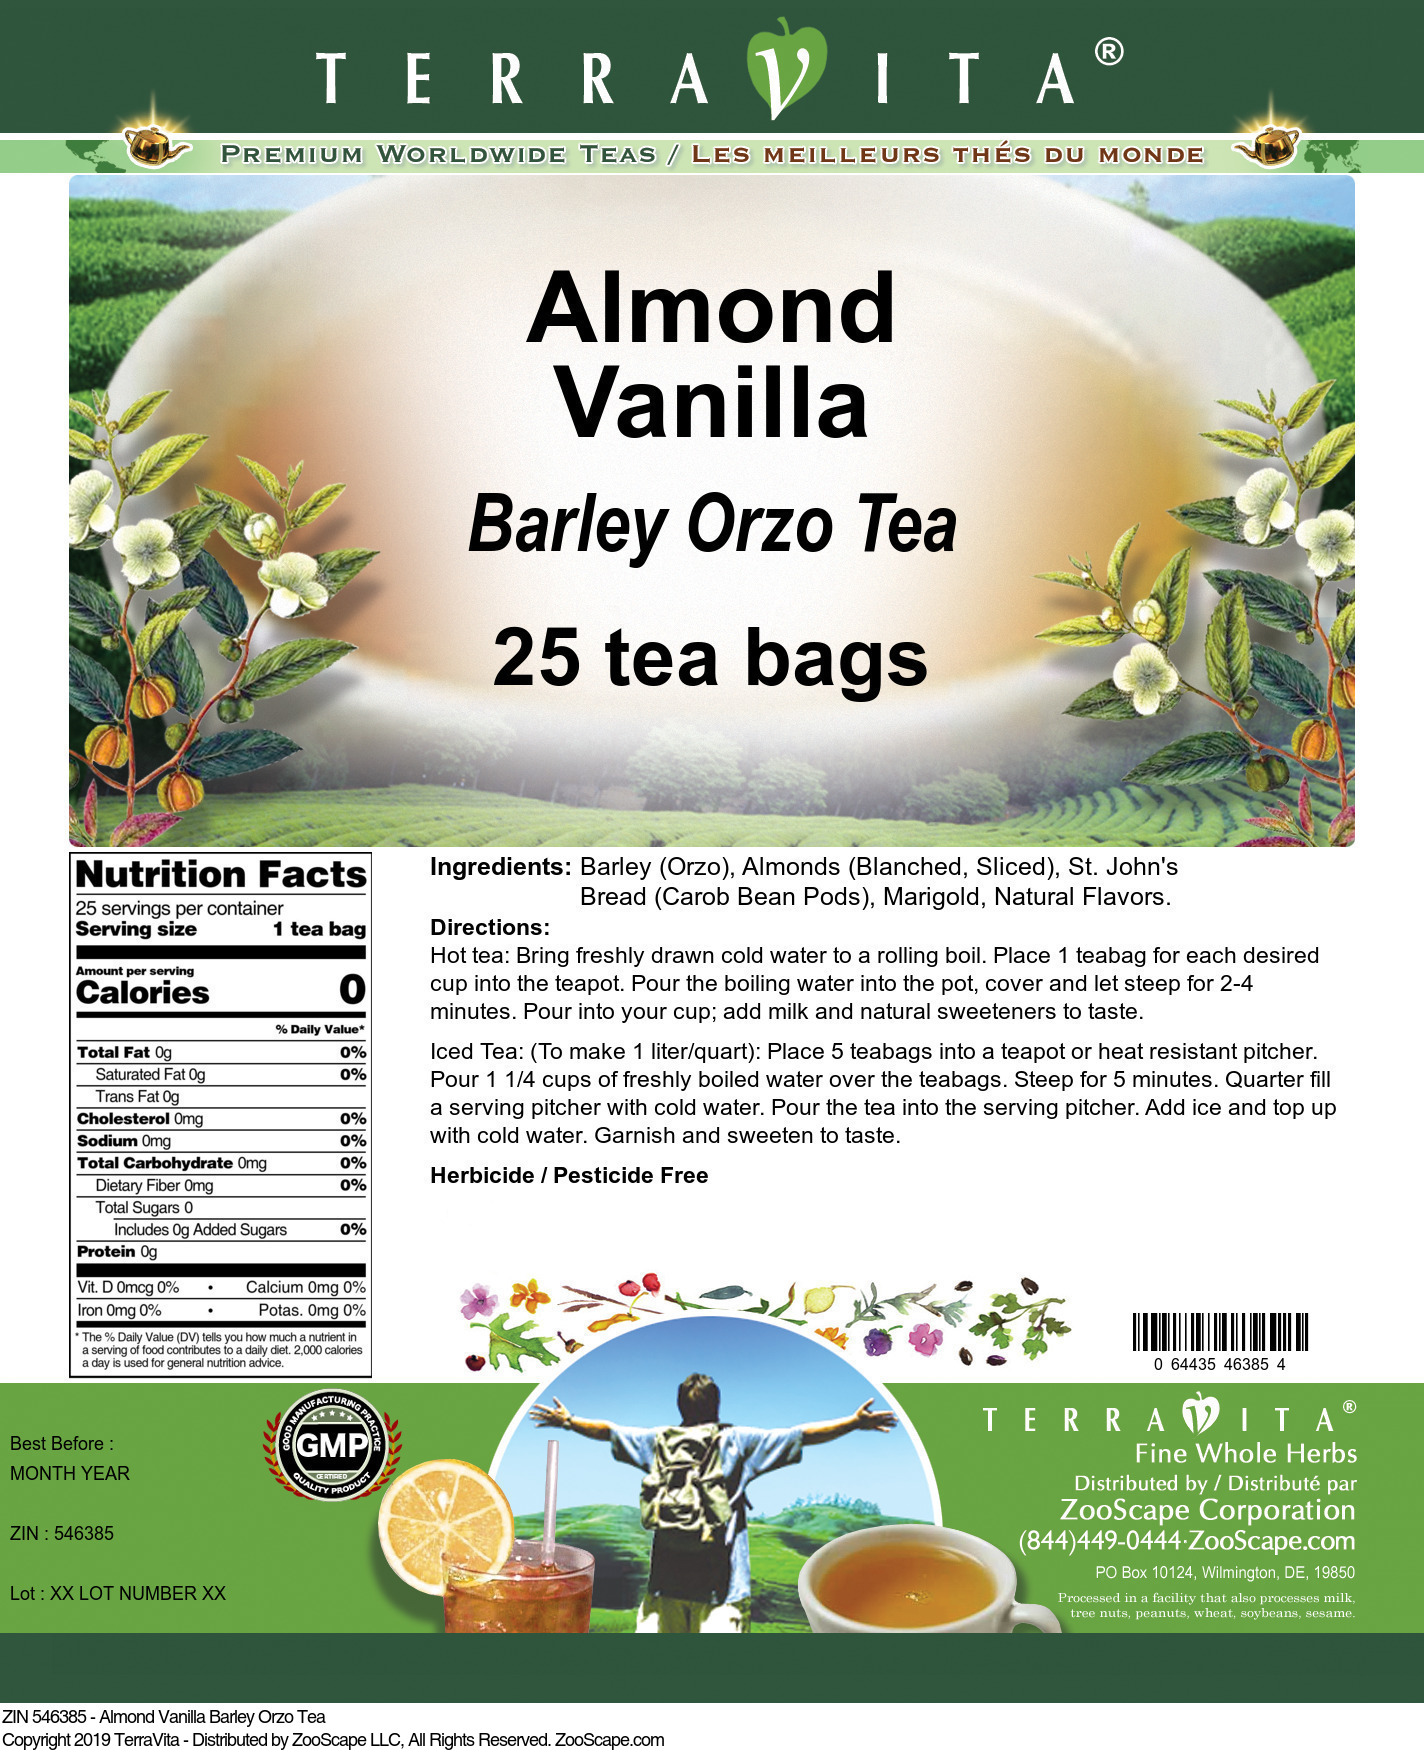 Almond Vanilla Barley Orzo Tea - Label